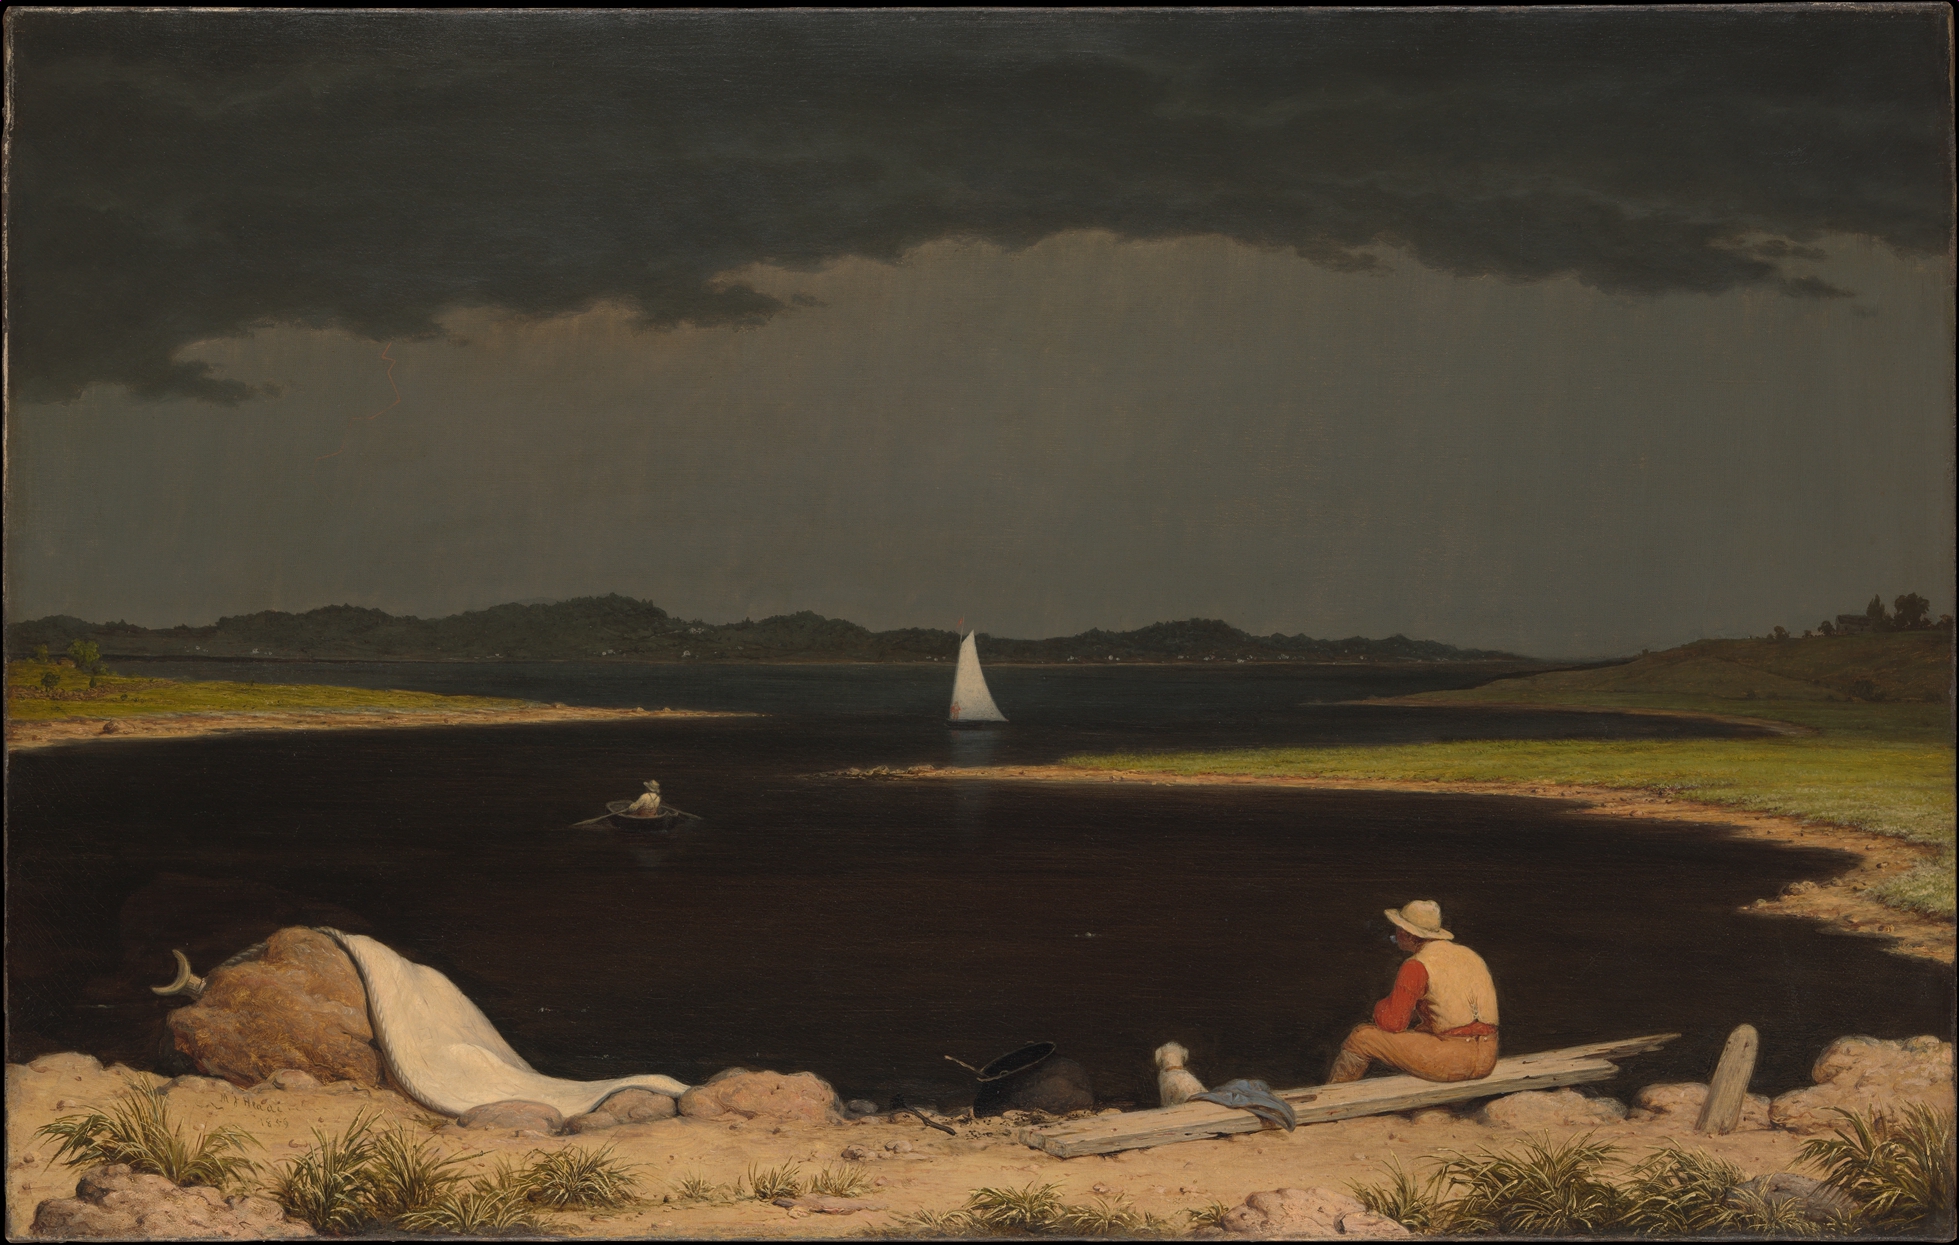 Approaching Thunder Storm by Martin Johnson Heade - 1859 - 71.1 x 111.8cm Metropolitan Museum of Art